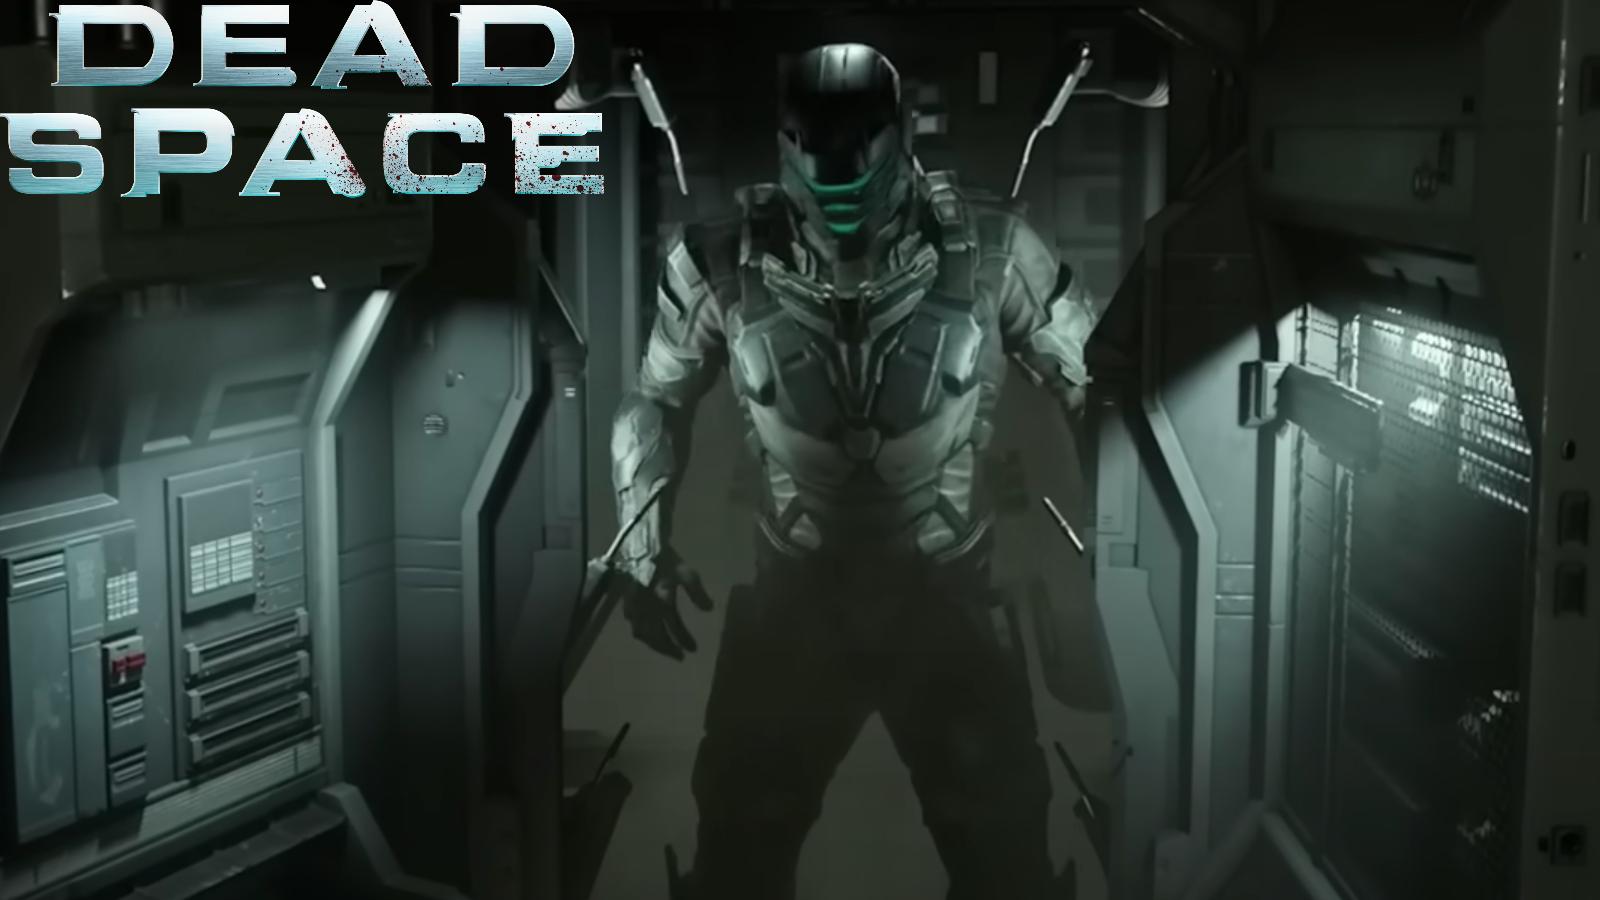 Dead Space suit upgrades explained